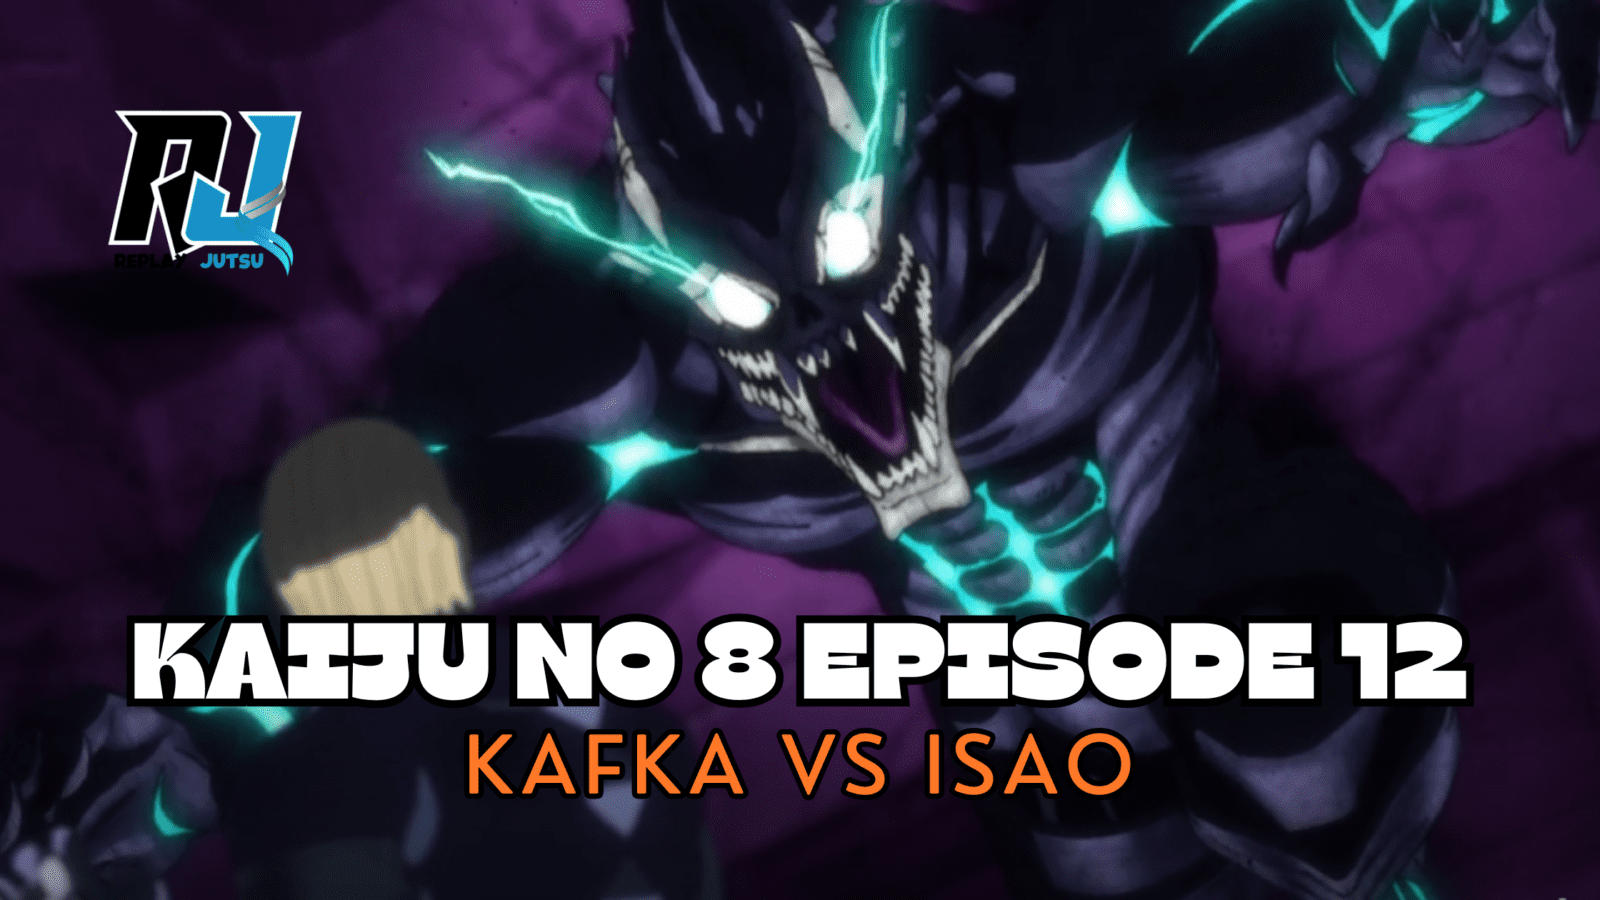 Kaiju No 8 Episode 12 Release Date and Spoilers - Kafka vs Director Isao Shinomiya